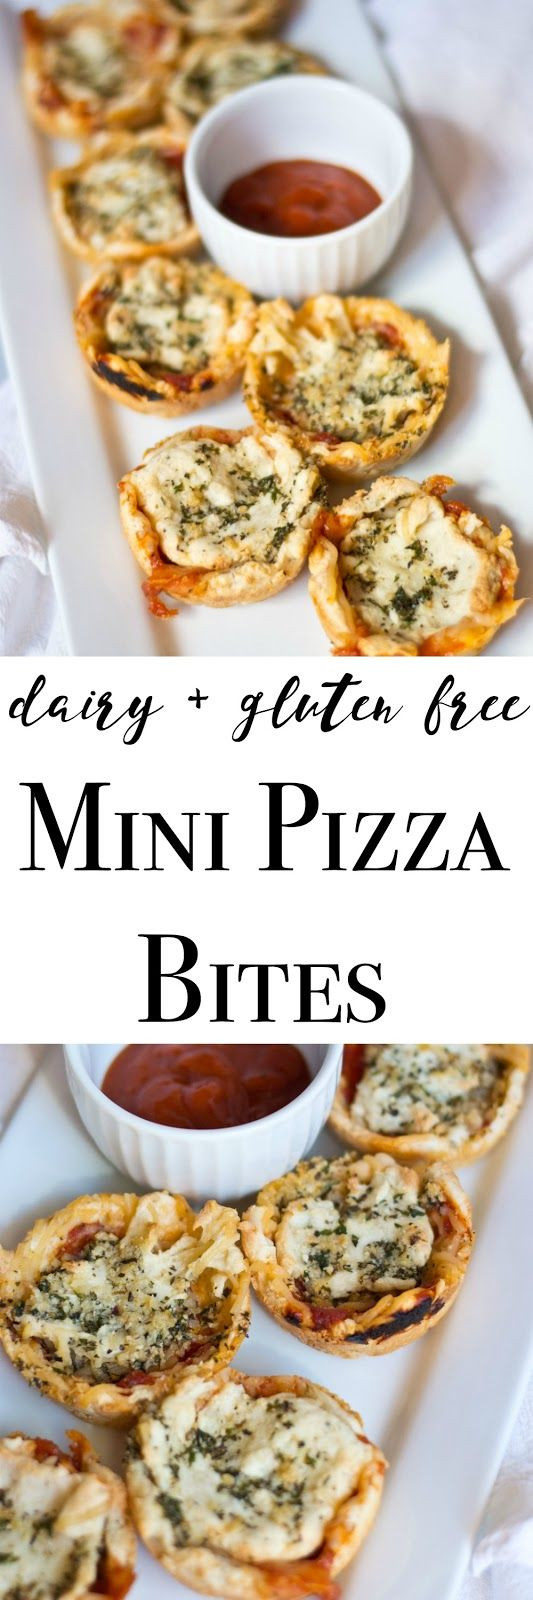 Gluten Free Appetizers Food Network
 Mini Pizza Bites dairy gluten free